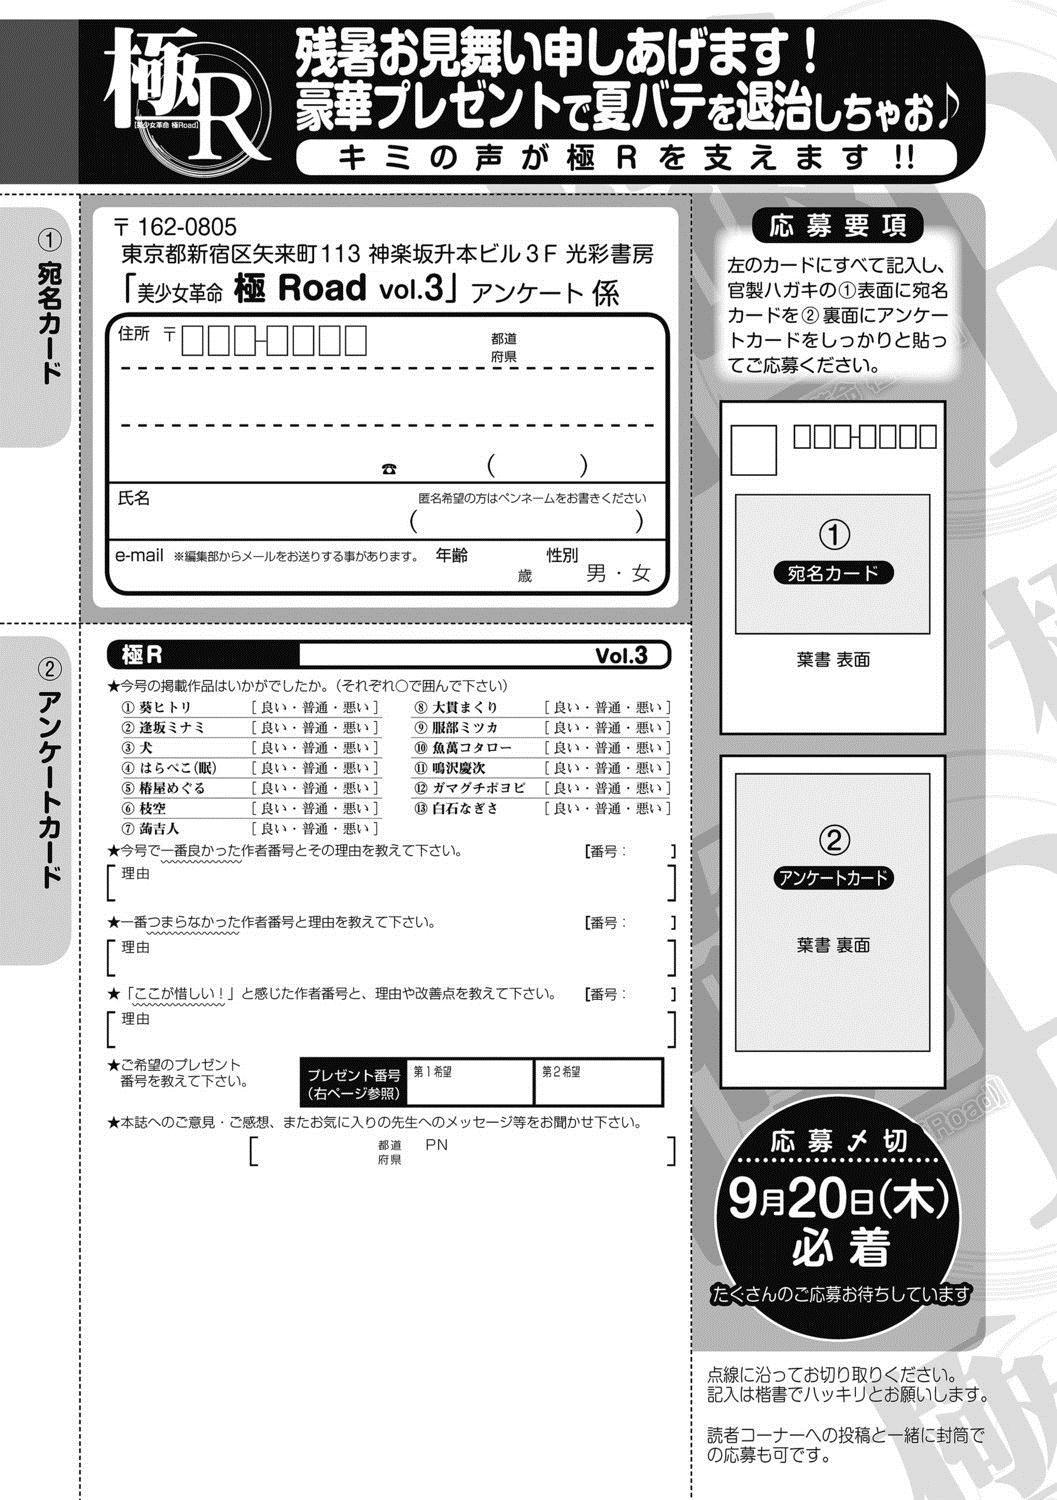 Bishoujo Kakumei KIWAME Road 2012-10 Vol.3 254